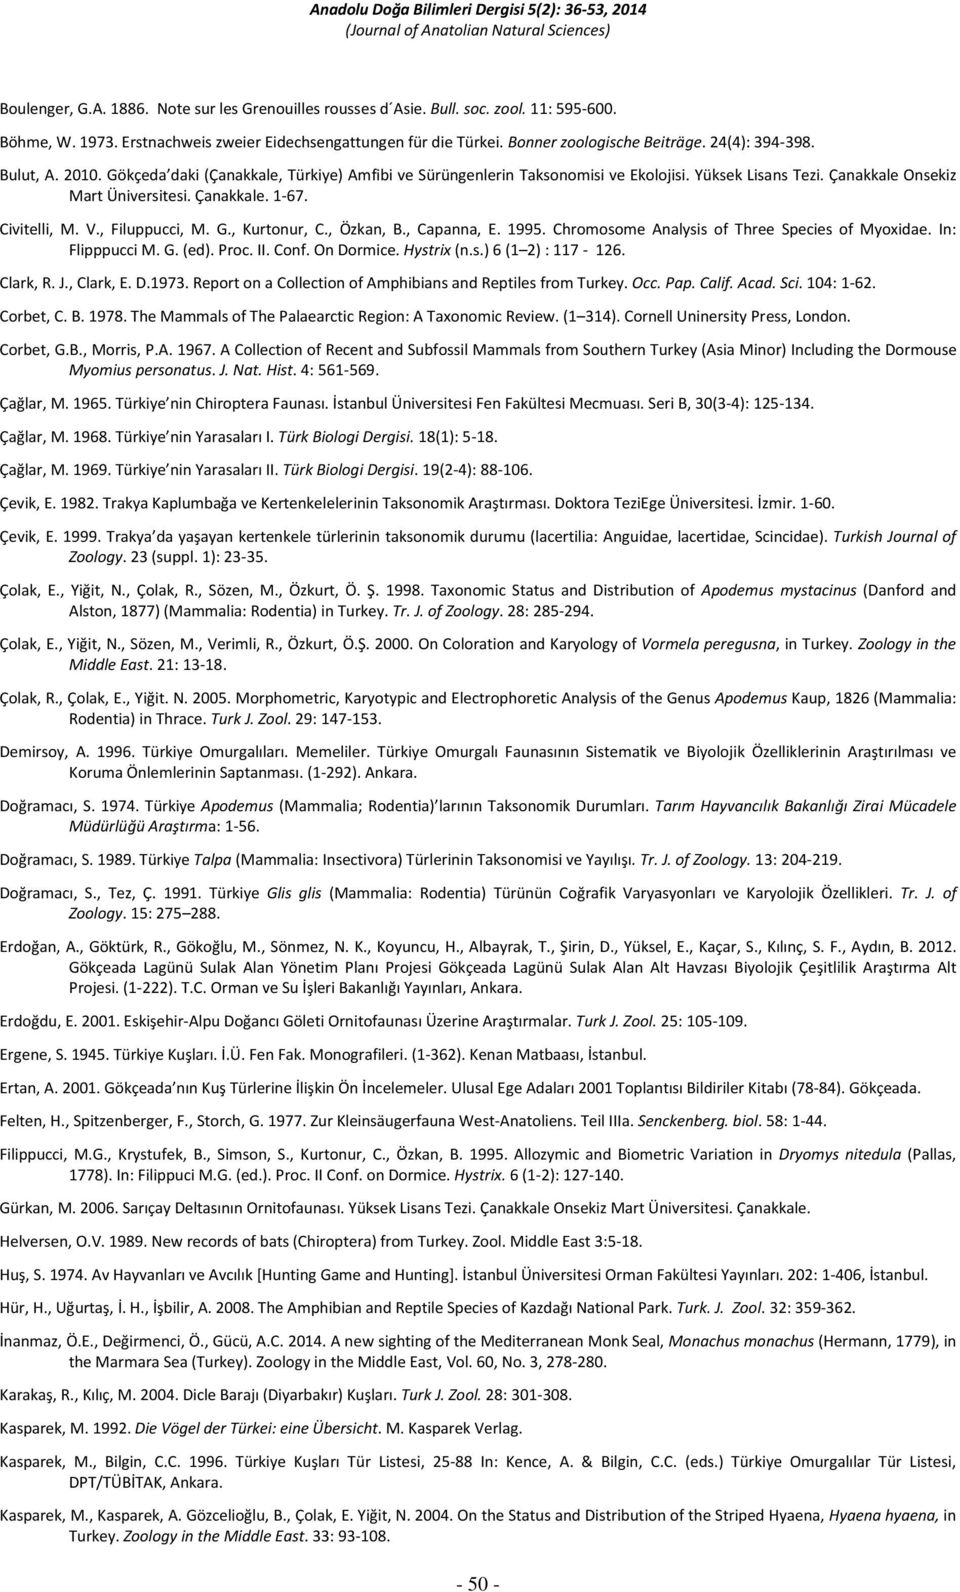 Civitelli, M. V., Filuppucci, M. G., Kurtonur, C., Özkan, B., Capanna, E. 1995. Chromosome Analysis of Three Species of Myoxidae. In: Flipppucci M. G. (ed). Proc. II. Conf. On Dormice. Hystrix (n.s.) 6 (1 2) : 117-126.